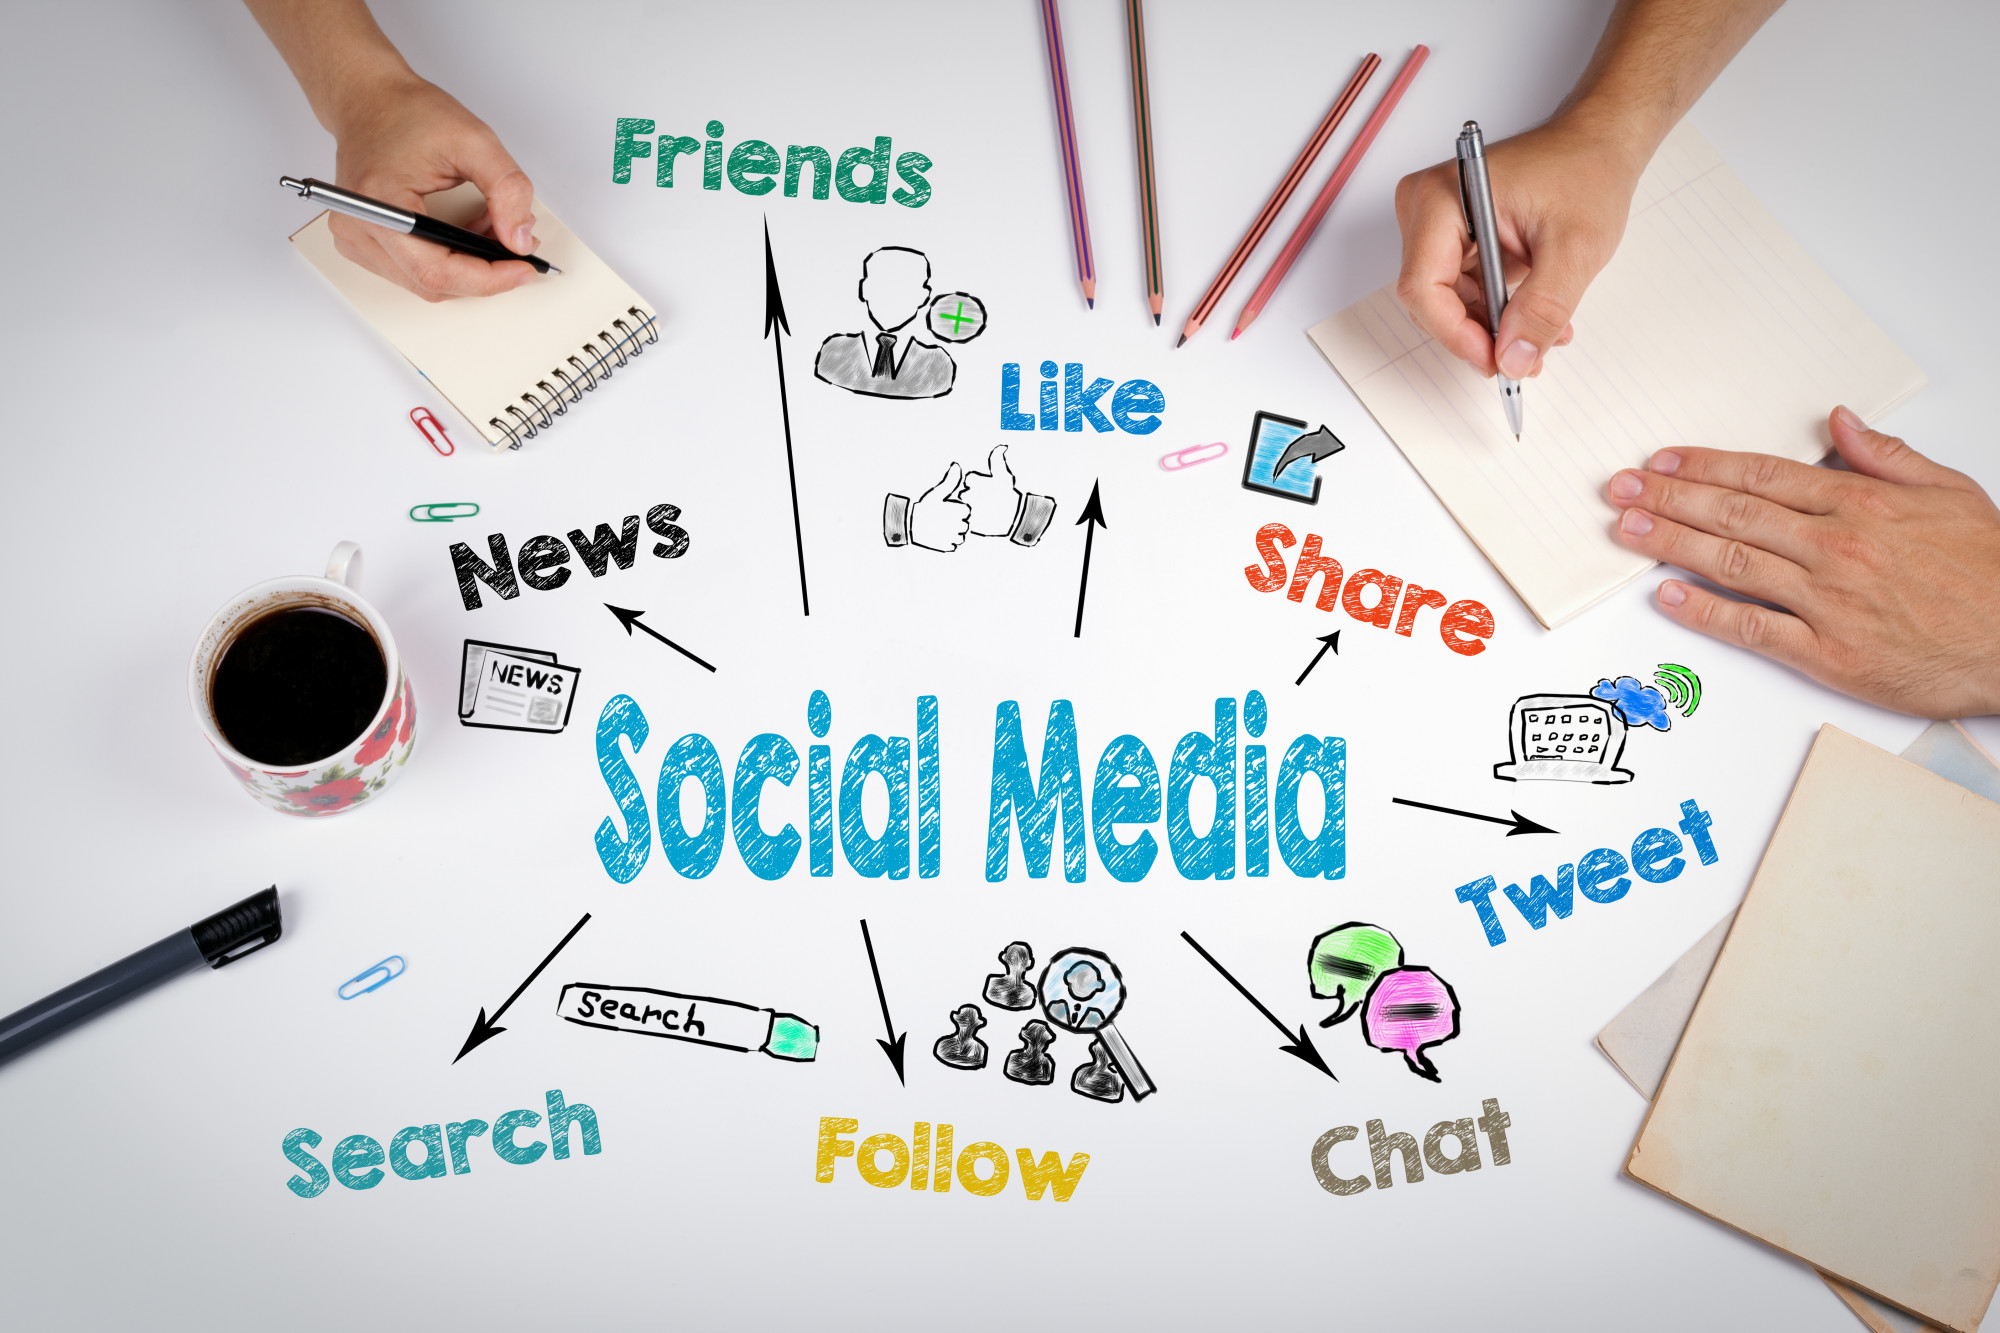 The Importance of Social Media Marketing